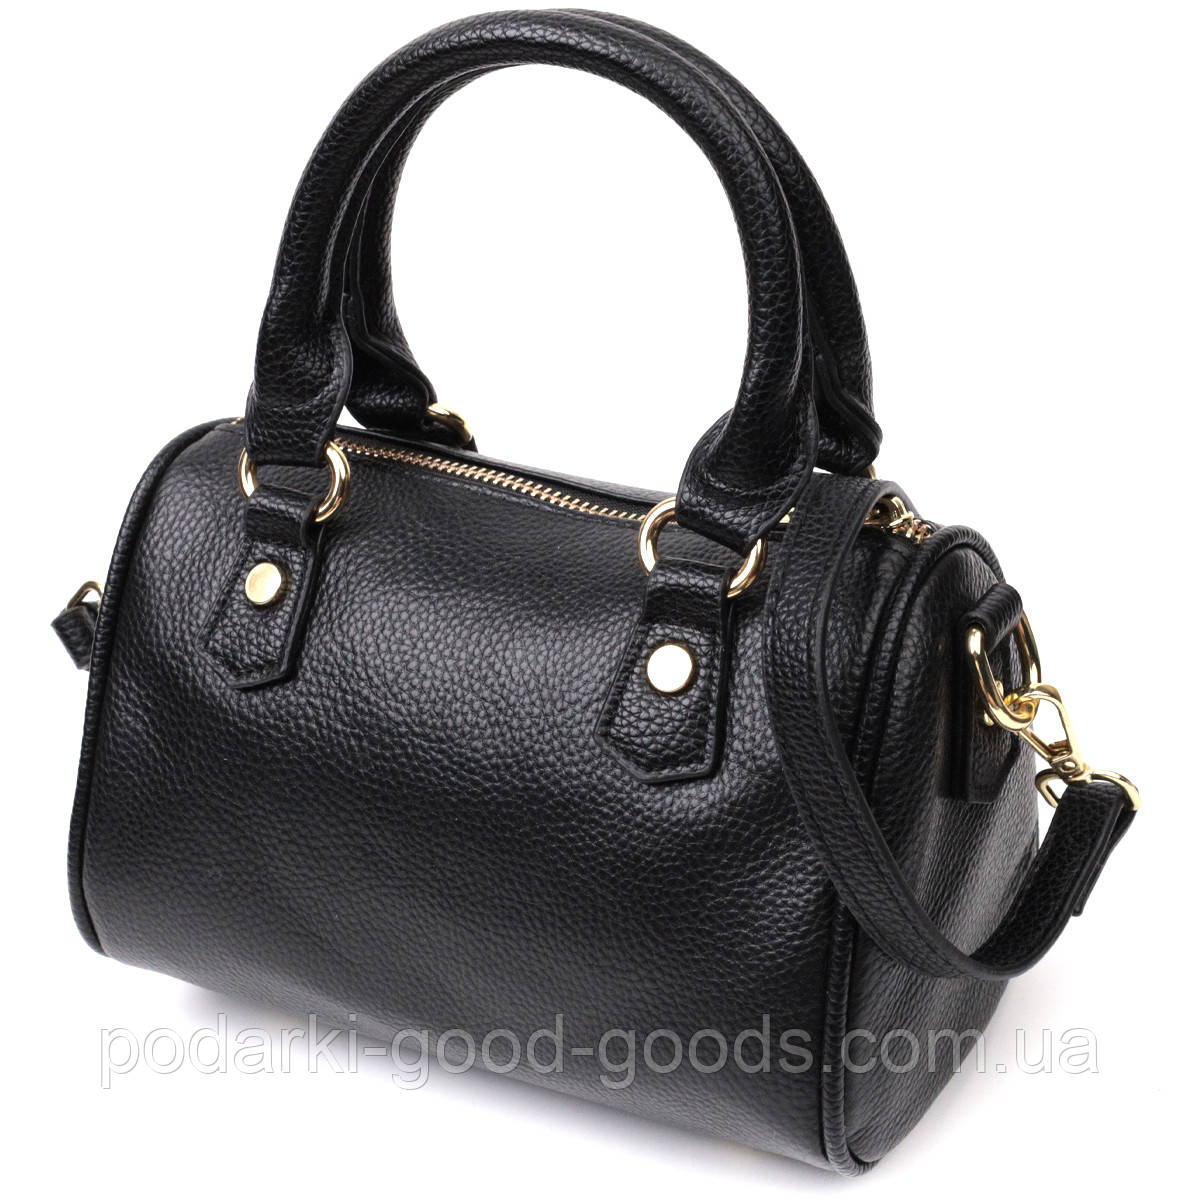 Елегантна жіноча сумка-бочечка з двома ручками з натуральної шкіри Vintage 22353 Чорна GG